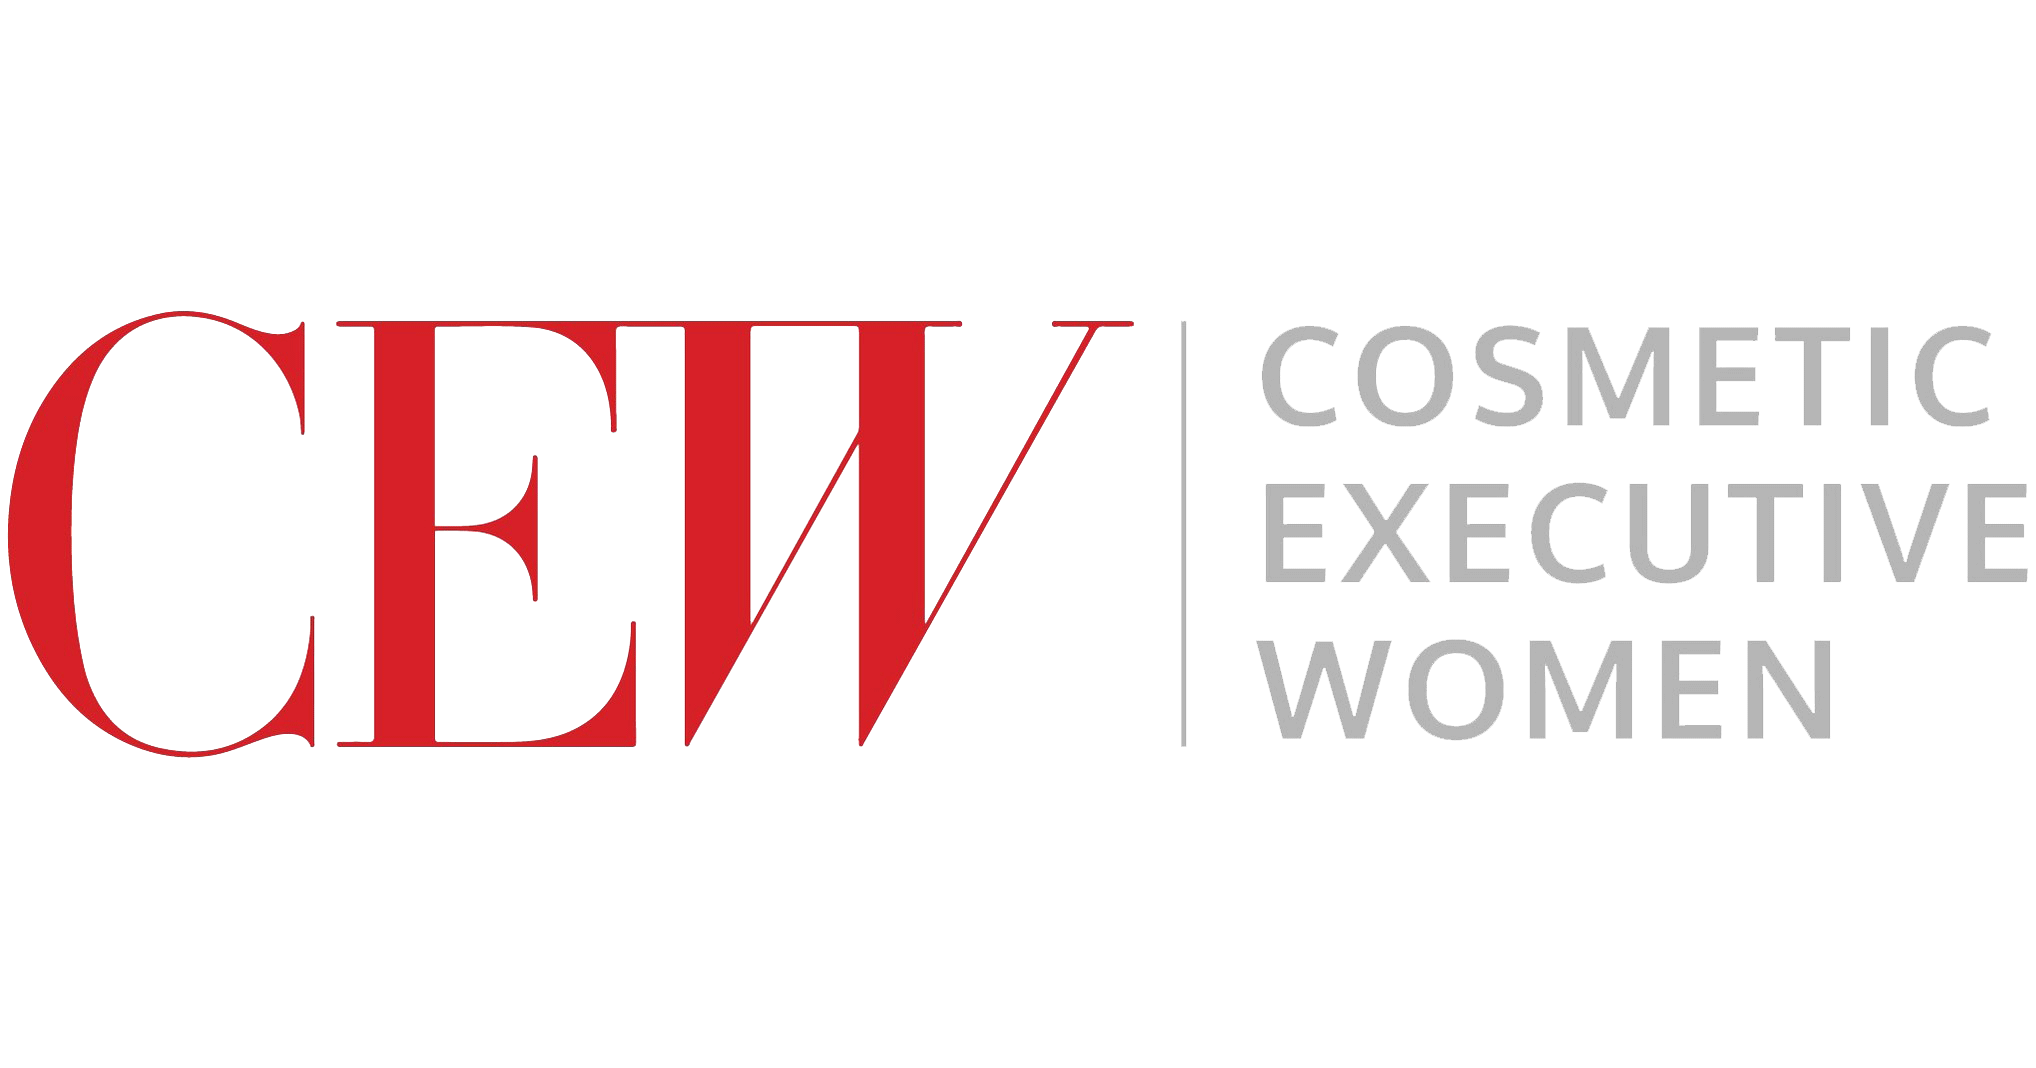 CEW Logo